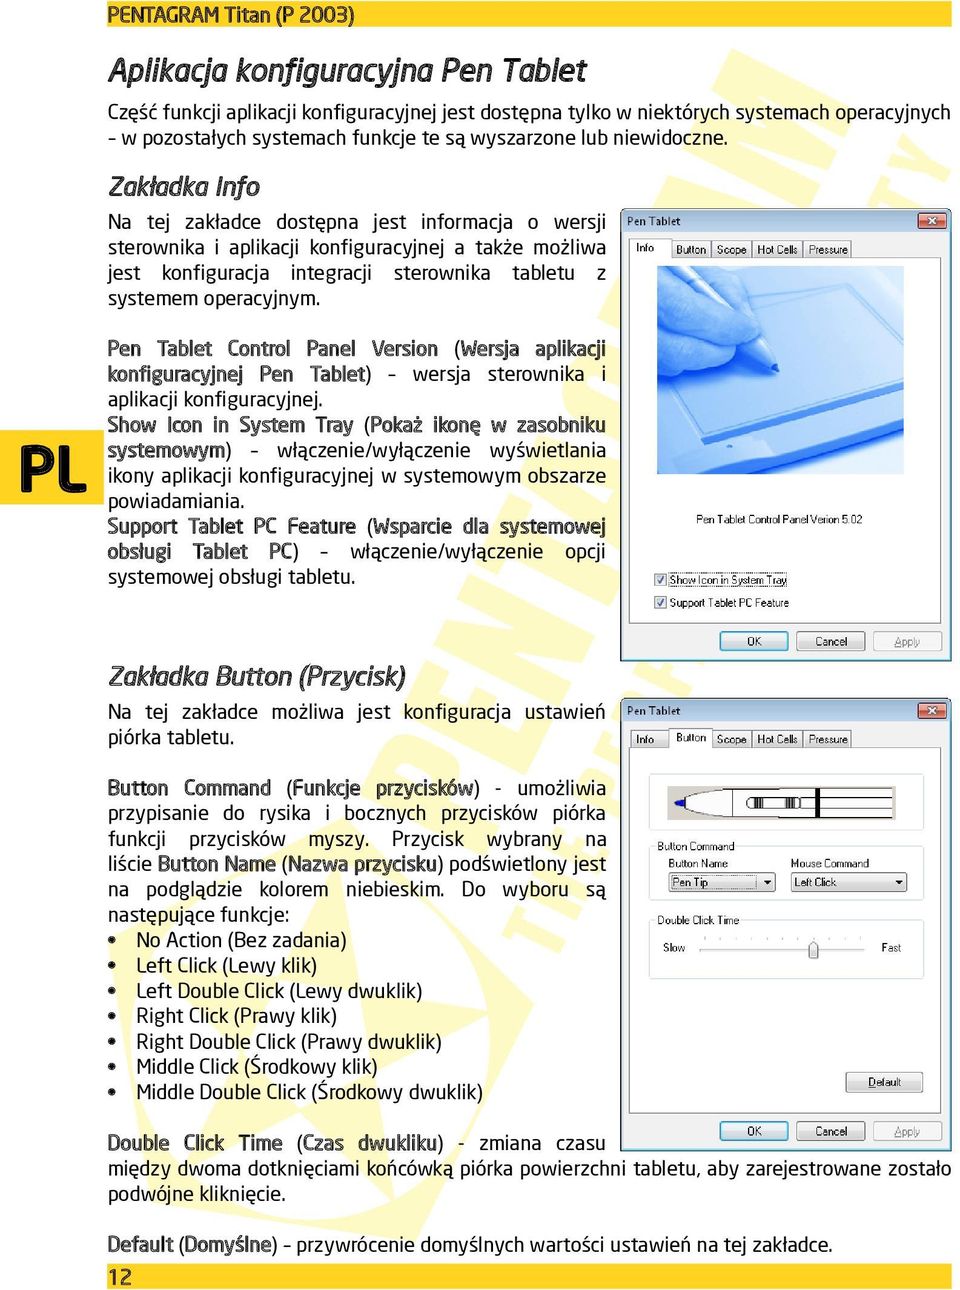 PL Pen Tablet Control Panel Version (Wersja aplikacji konfiguracyjnej Pen Tablet) wersja sterownika i aplikacji konfiguracyjnej.